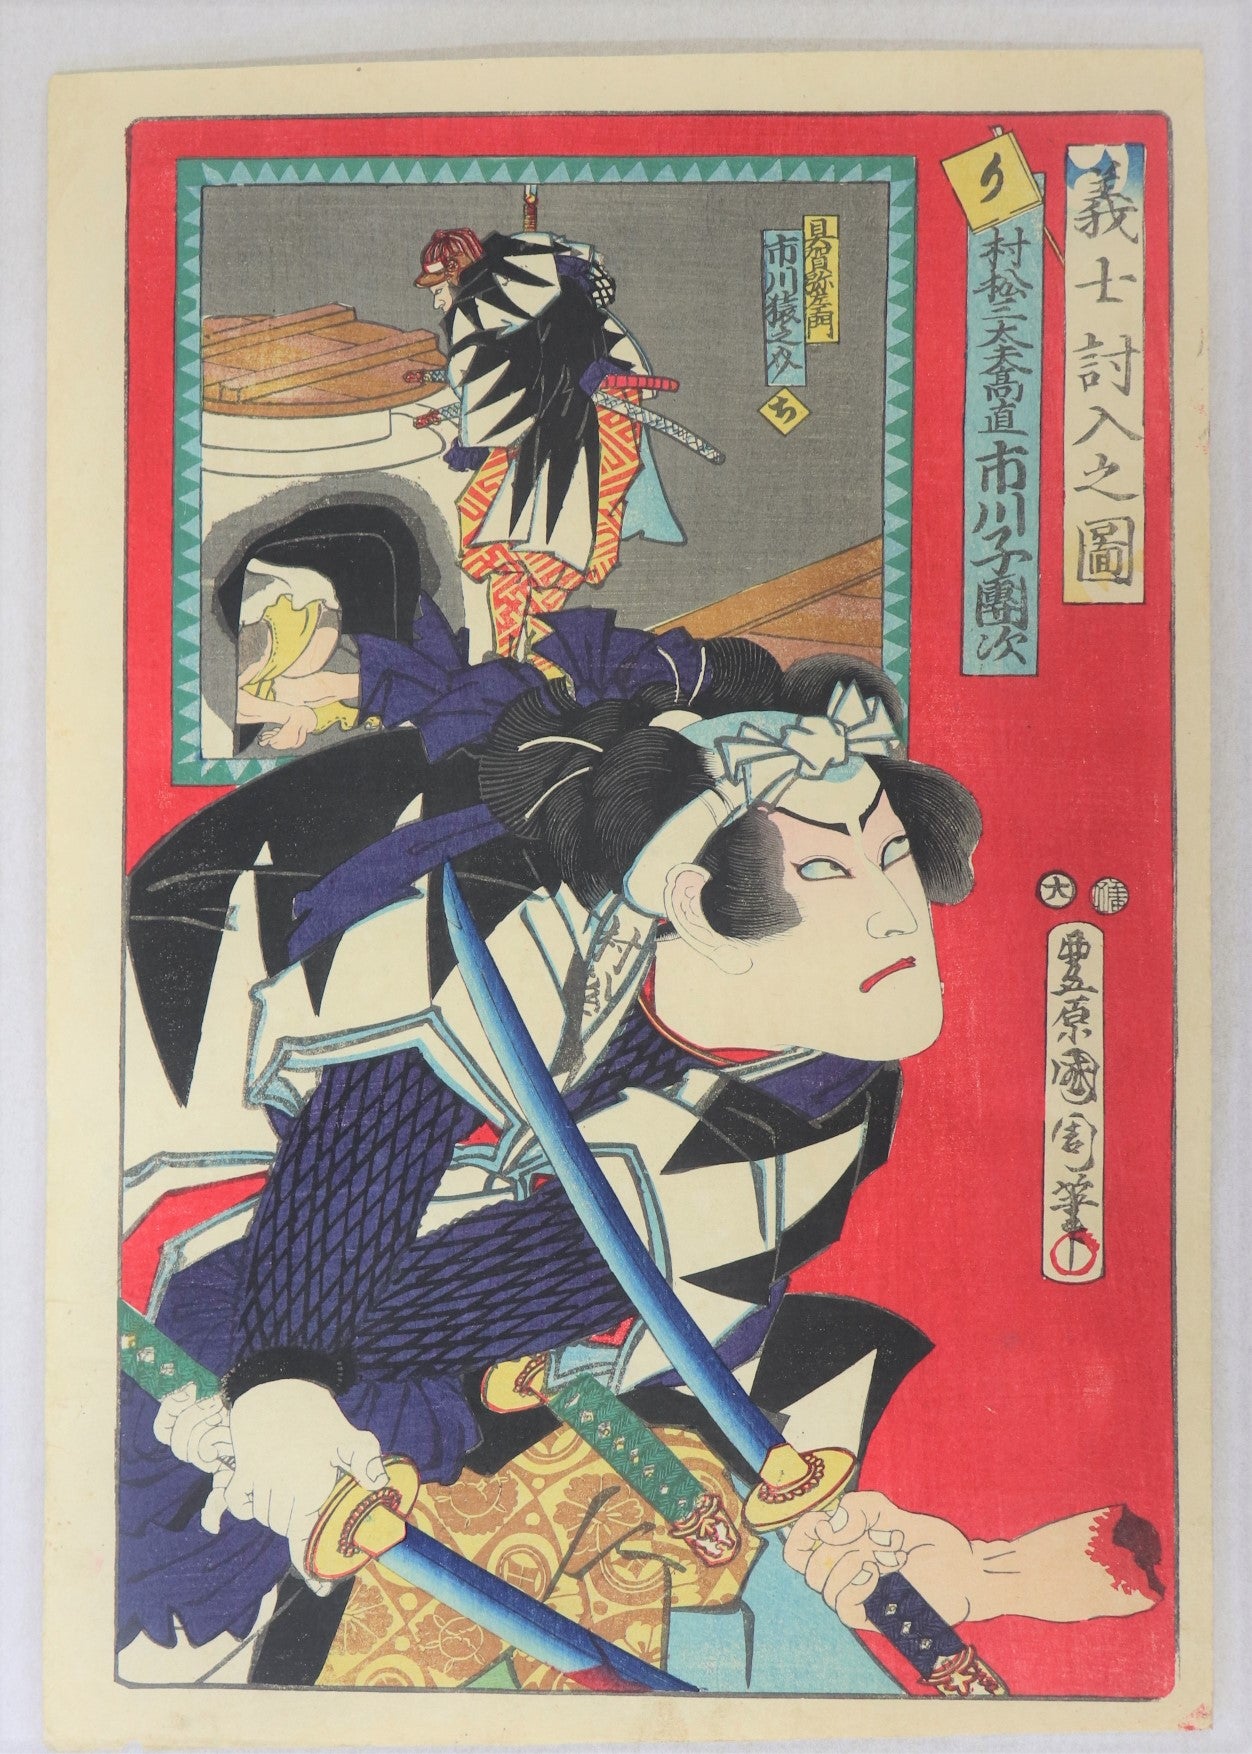 Ichikawa Nedanji as Muramatsu Sandayu Takanao from the series " Illustration of Faithful Samurais  " by Kunichika / Ichikawa Nedanji dans le rôle de Muramatsu Sandayu Takanao de la série " Illustration de loyaux Samourais " par Kunichika (1872)